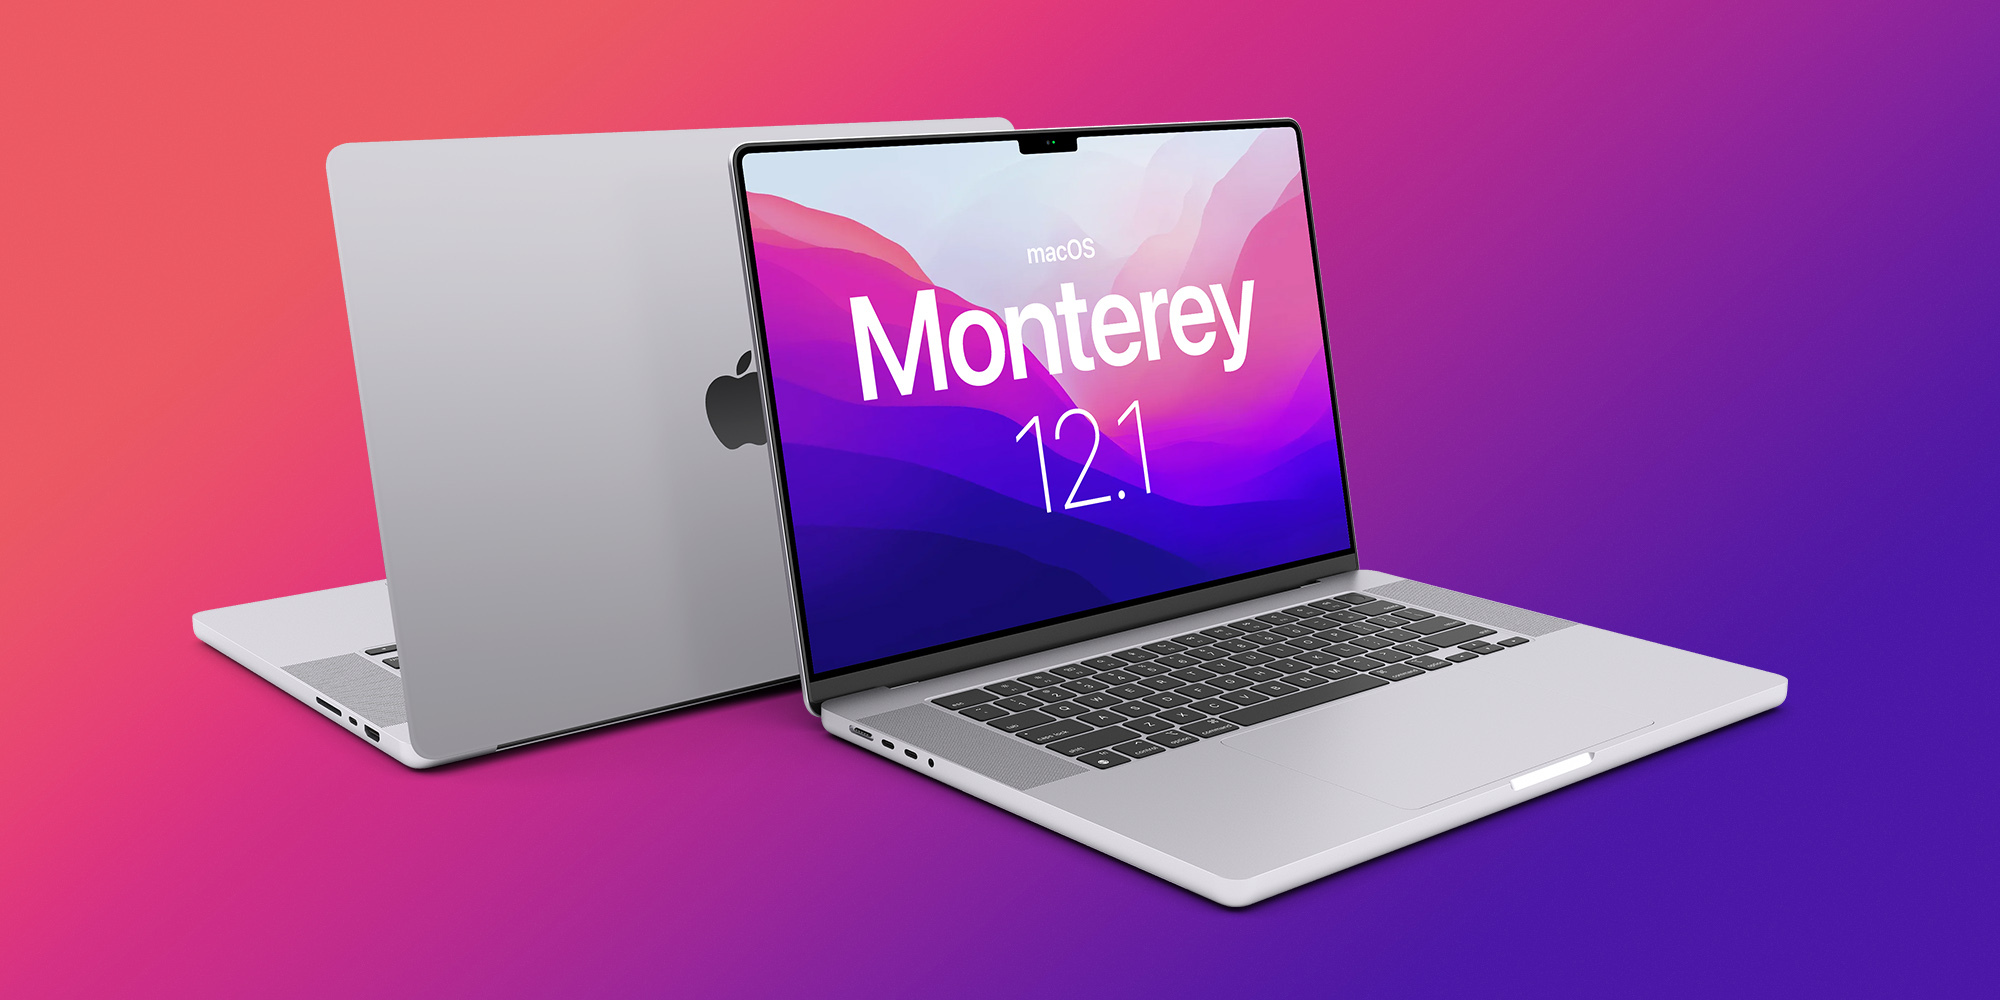 apple mac update january 9